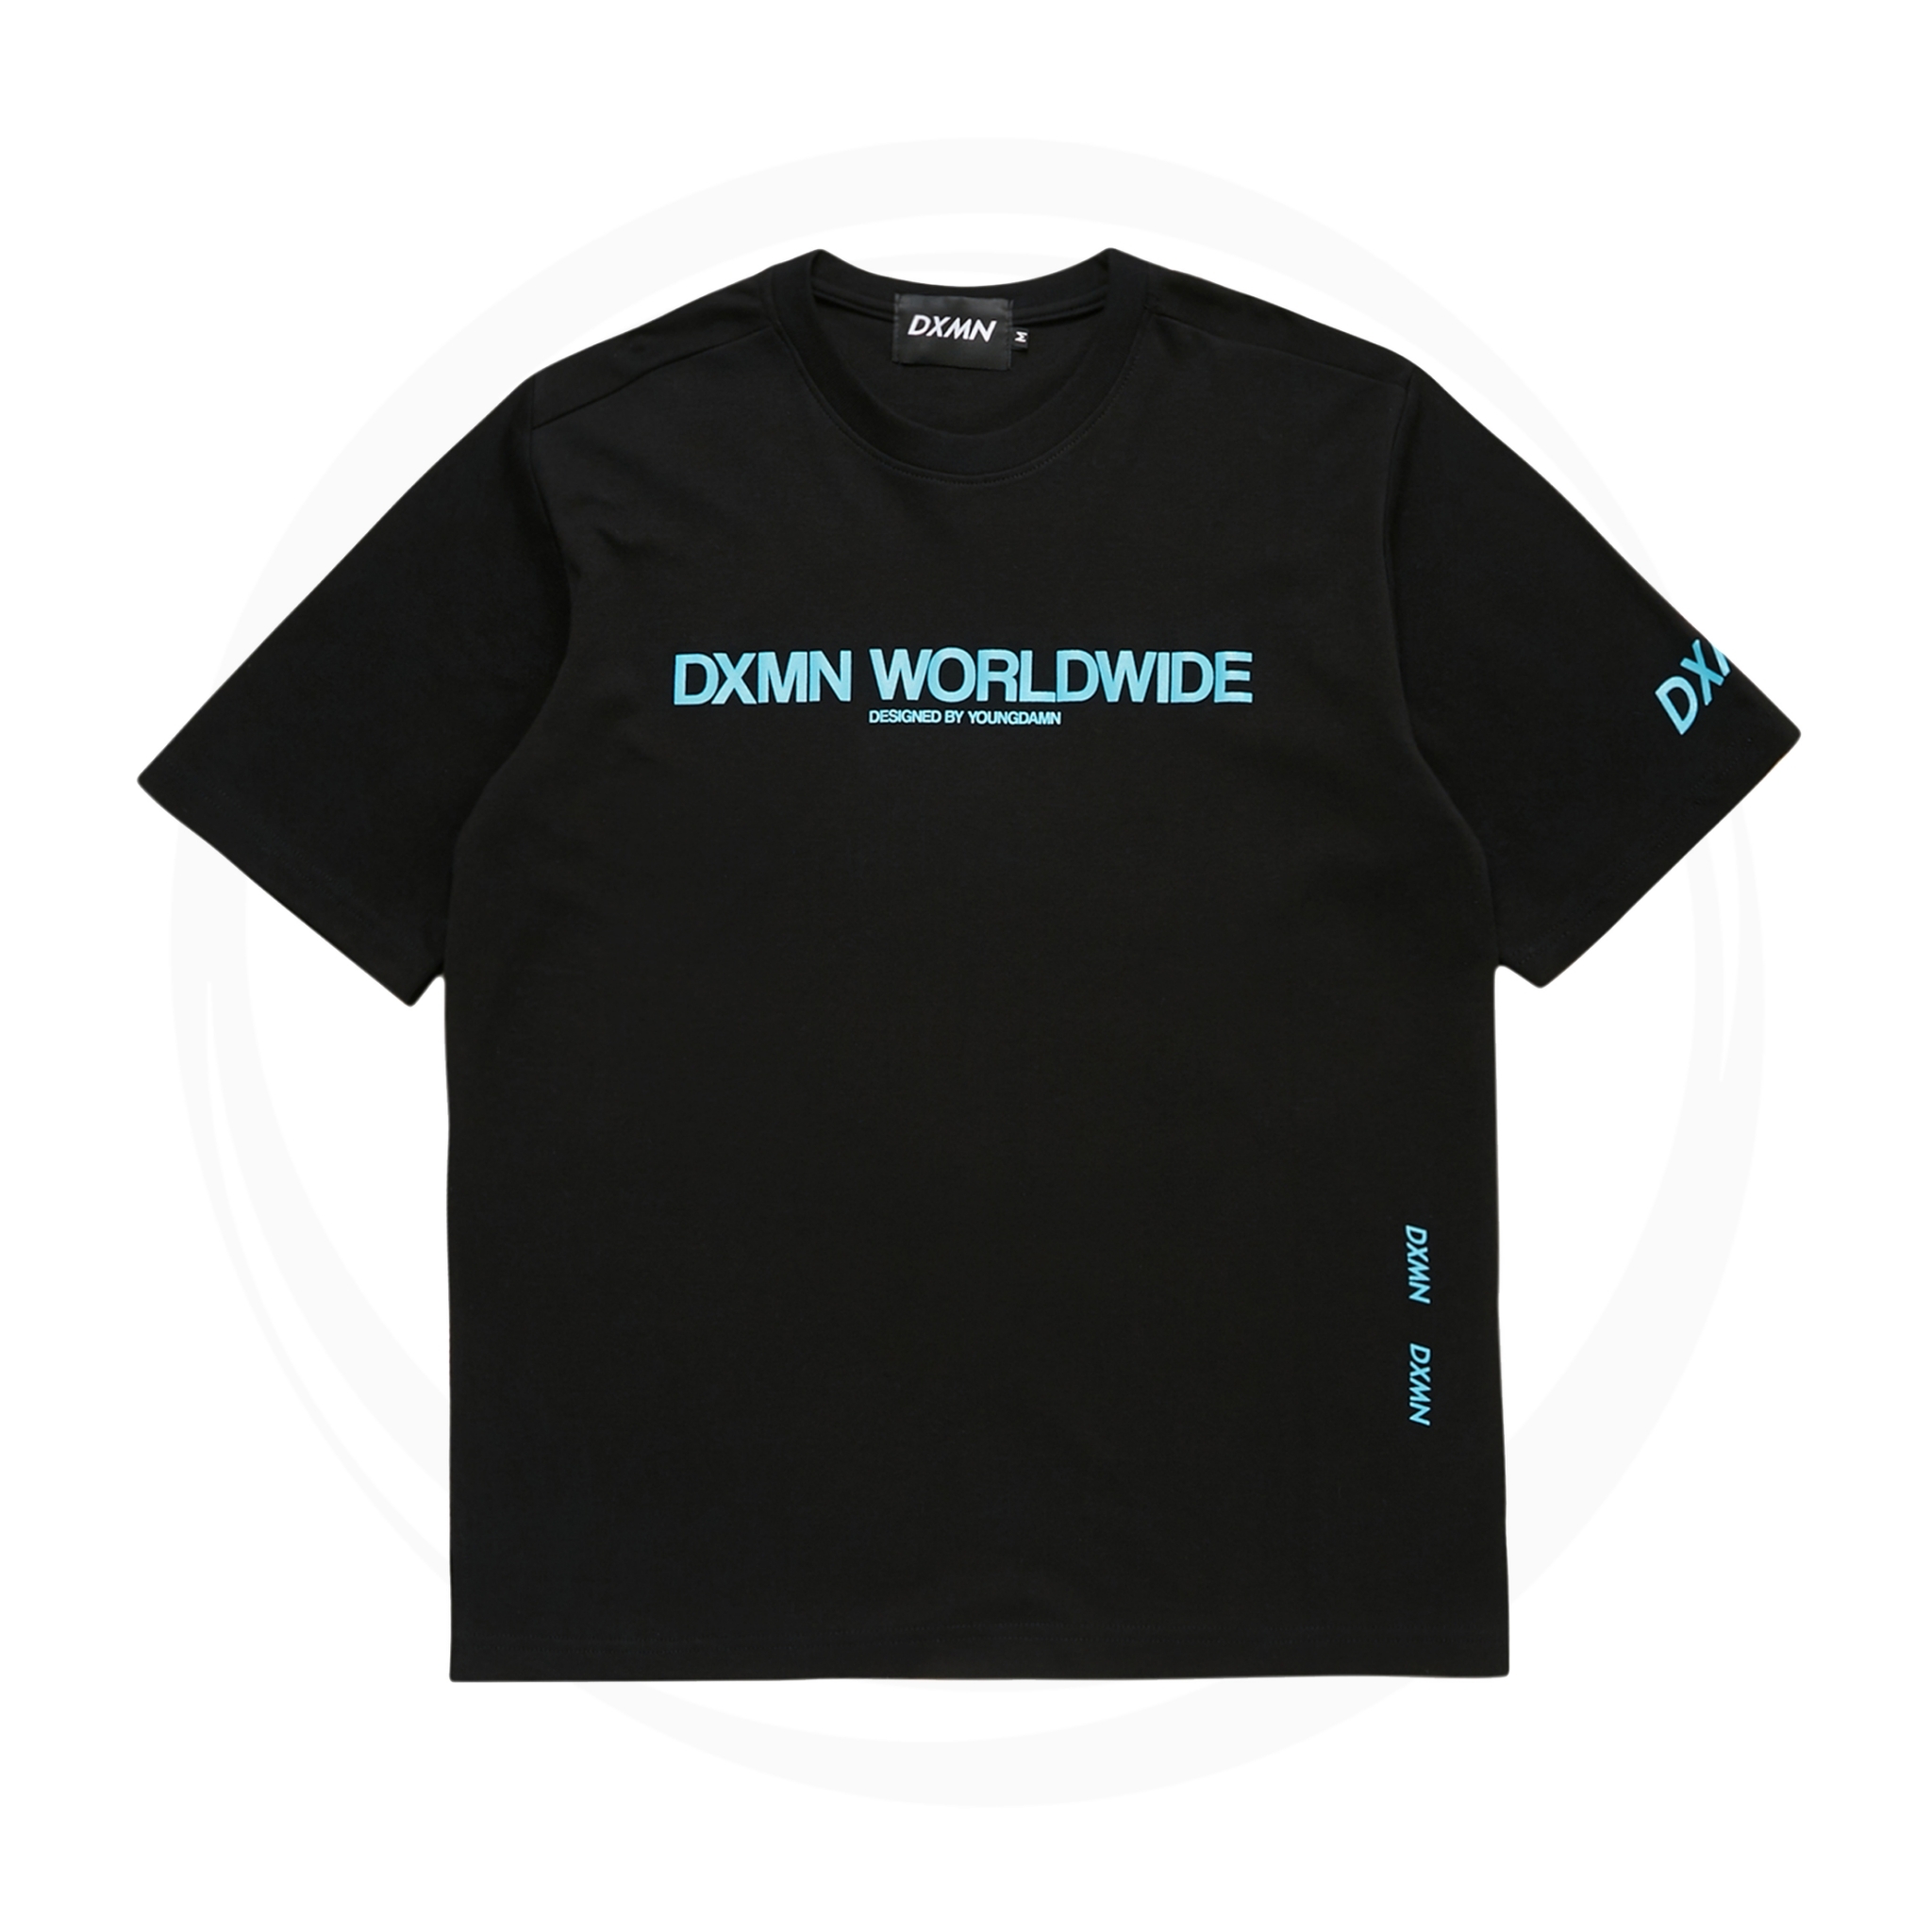 DXMN DXMN WORLDWIDE OVERSIZED T-SHIRT BLACK